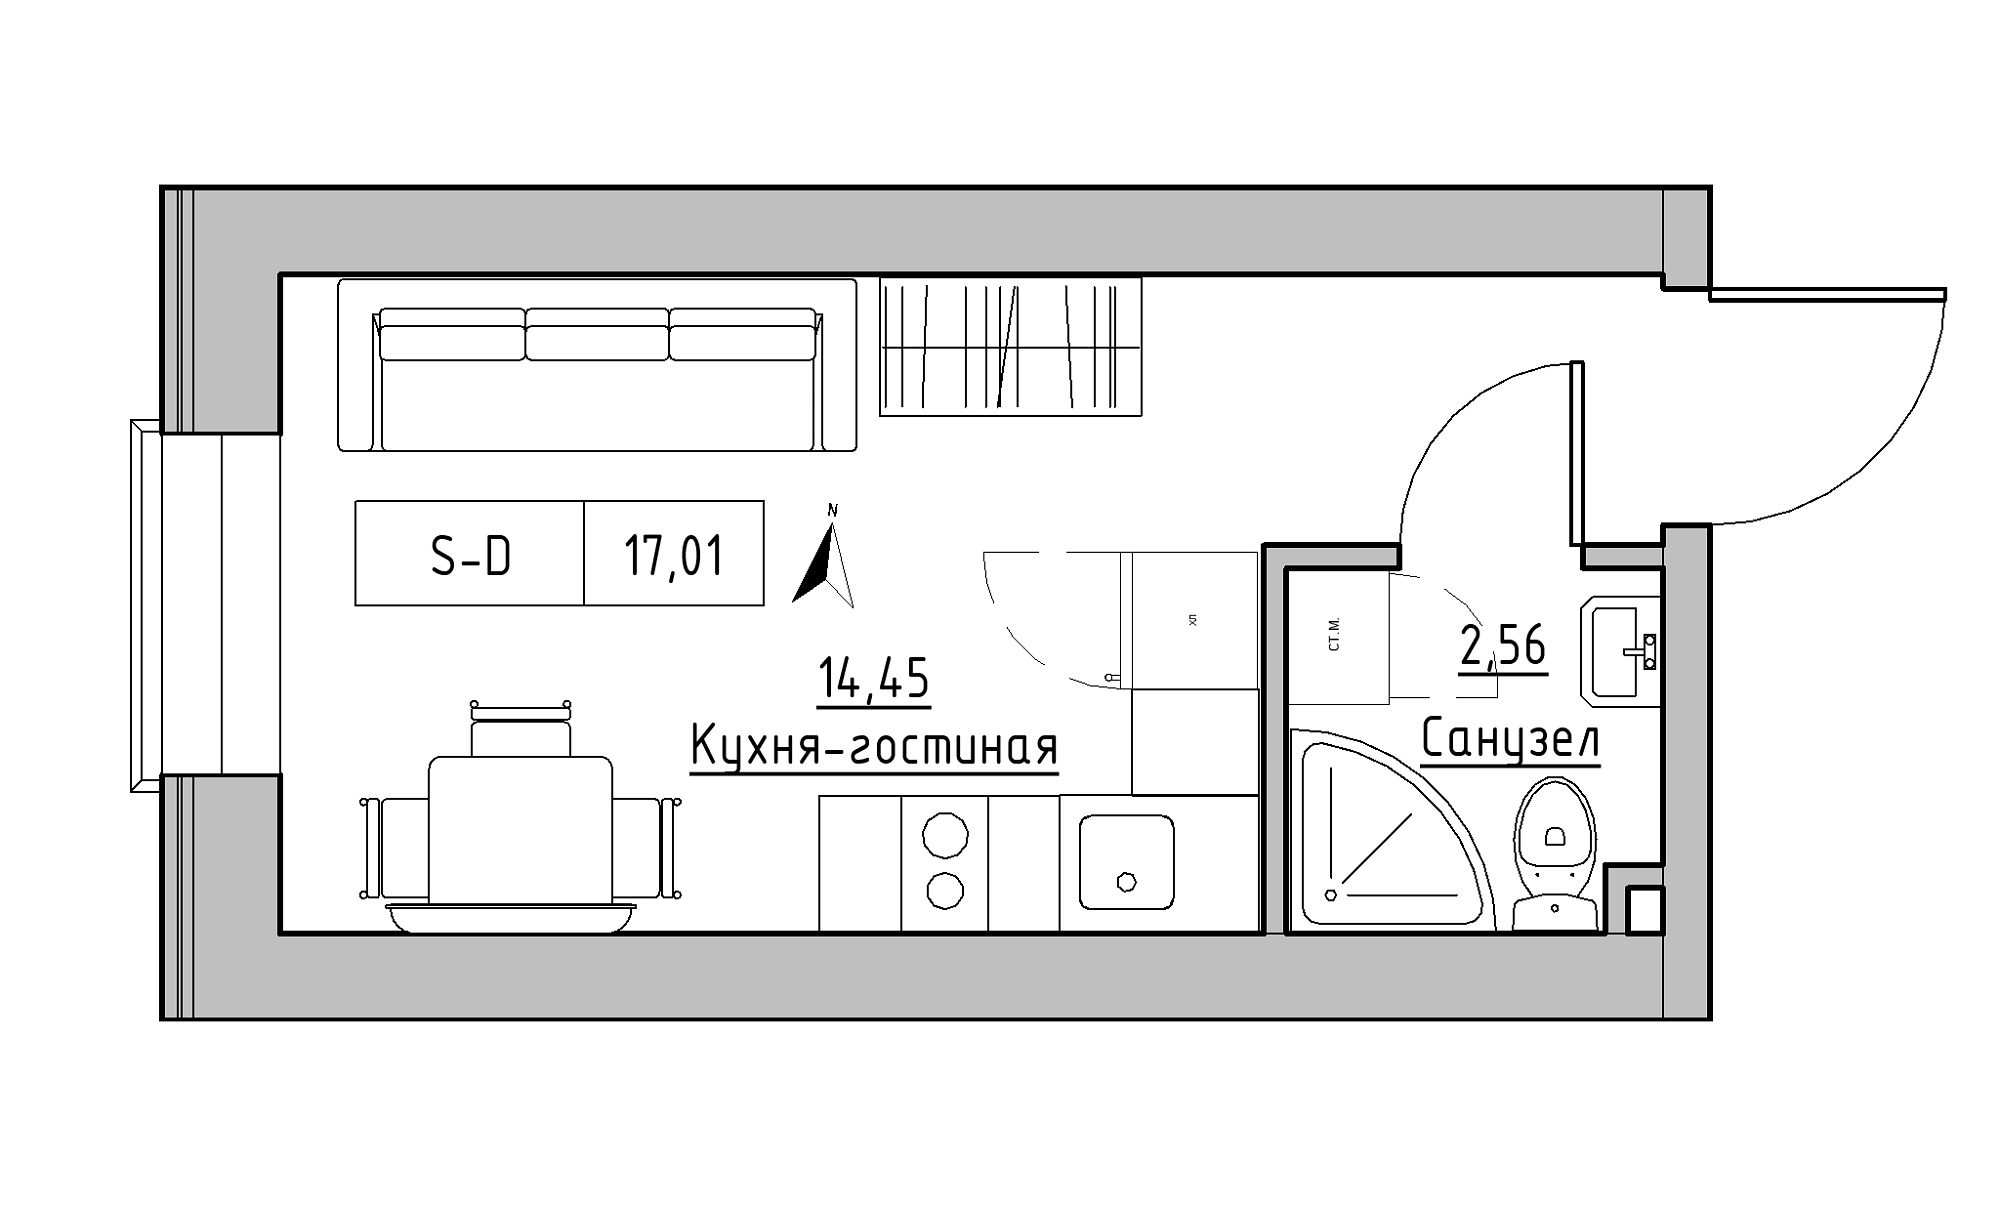 Planning Smart flats area 17.01m2, KS-023-05/0002.